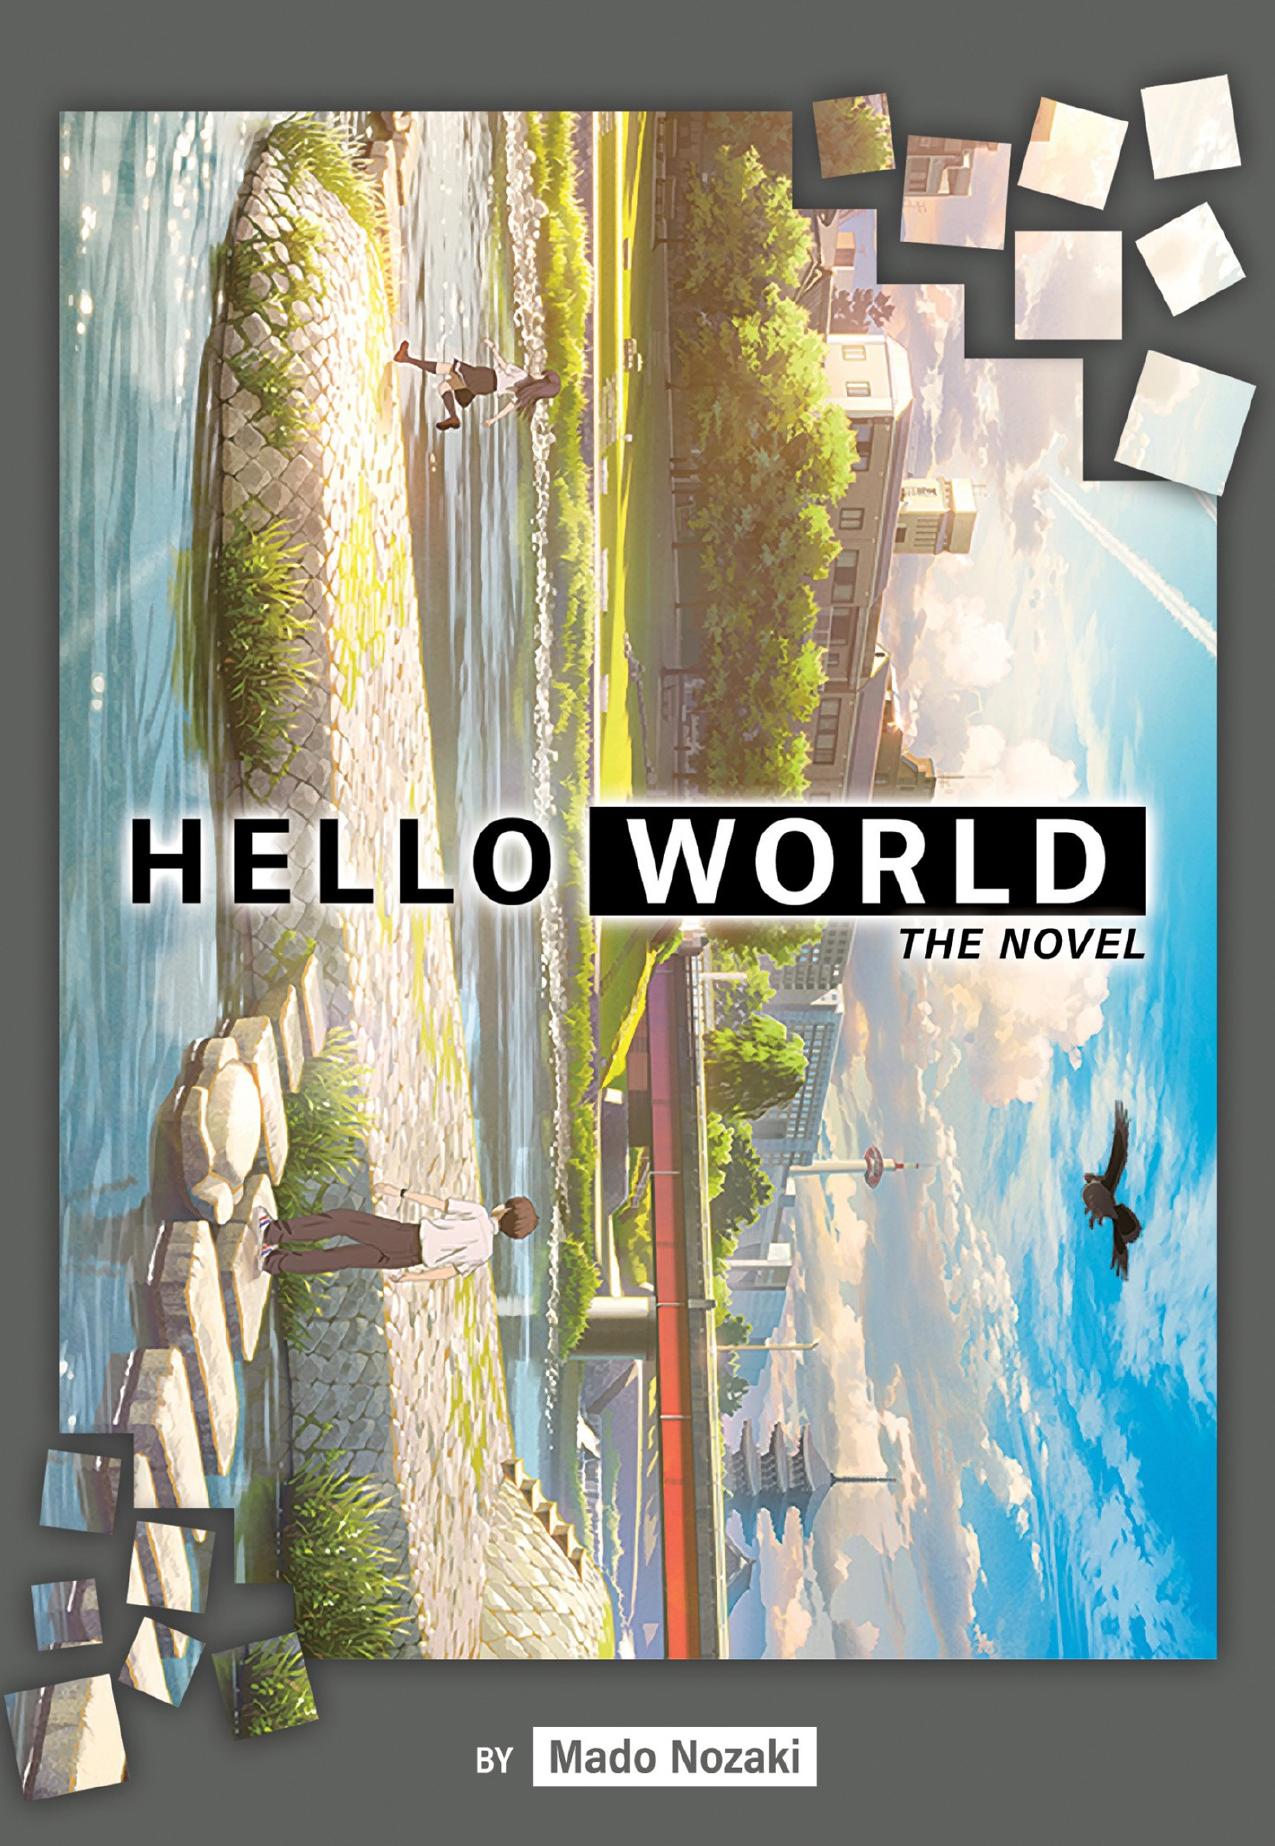 HELLO WORLD by Mado Nozaki